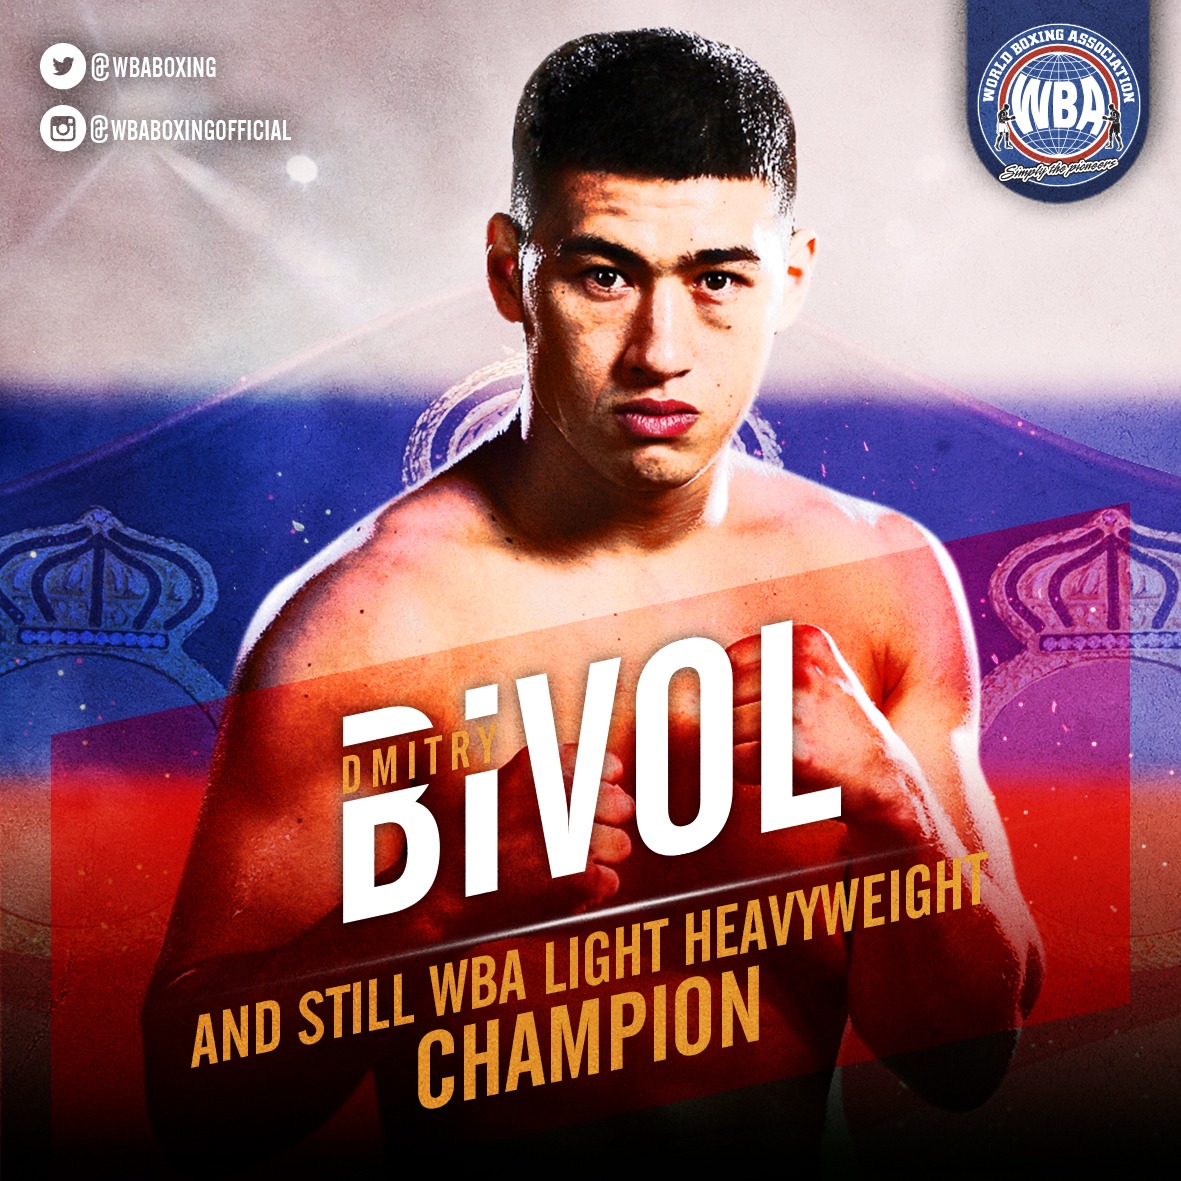 Bivol retains his WBA World Light Heavyweight Title